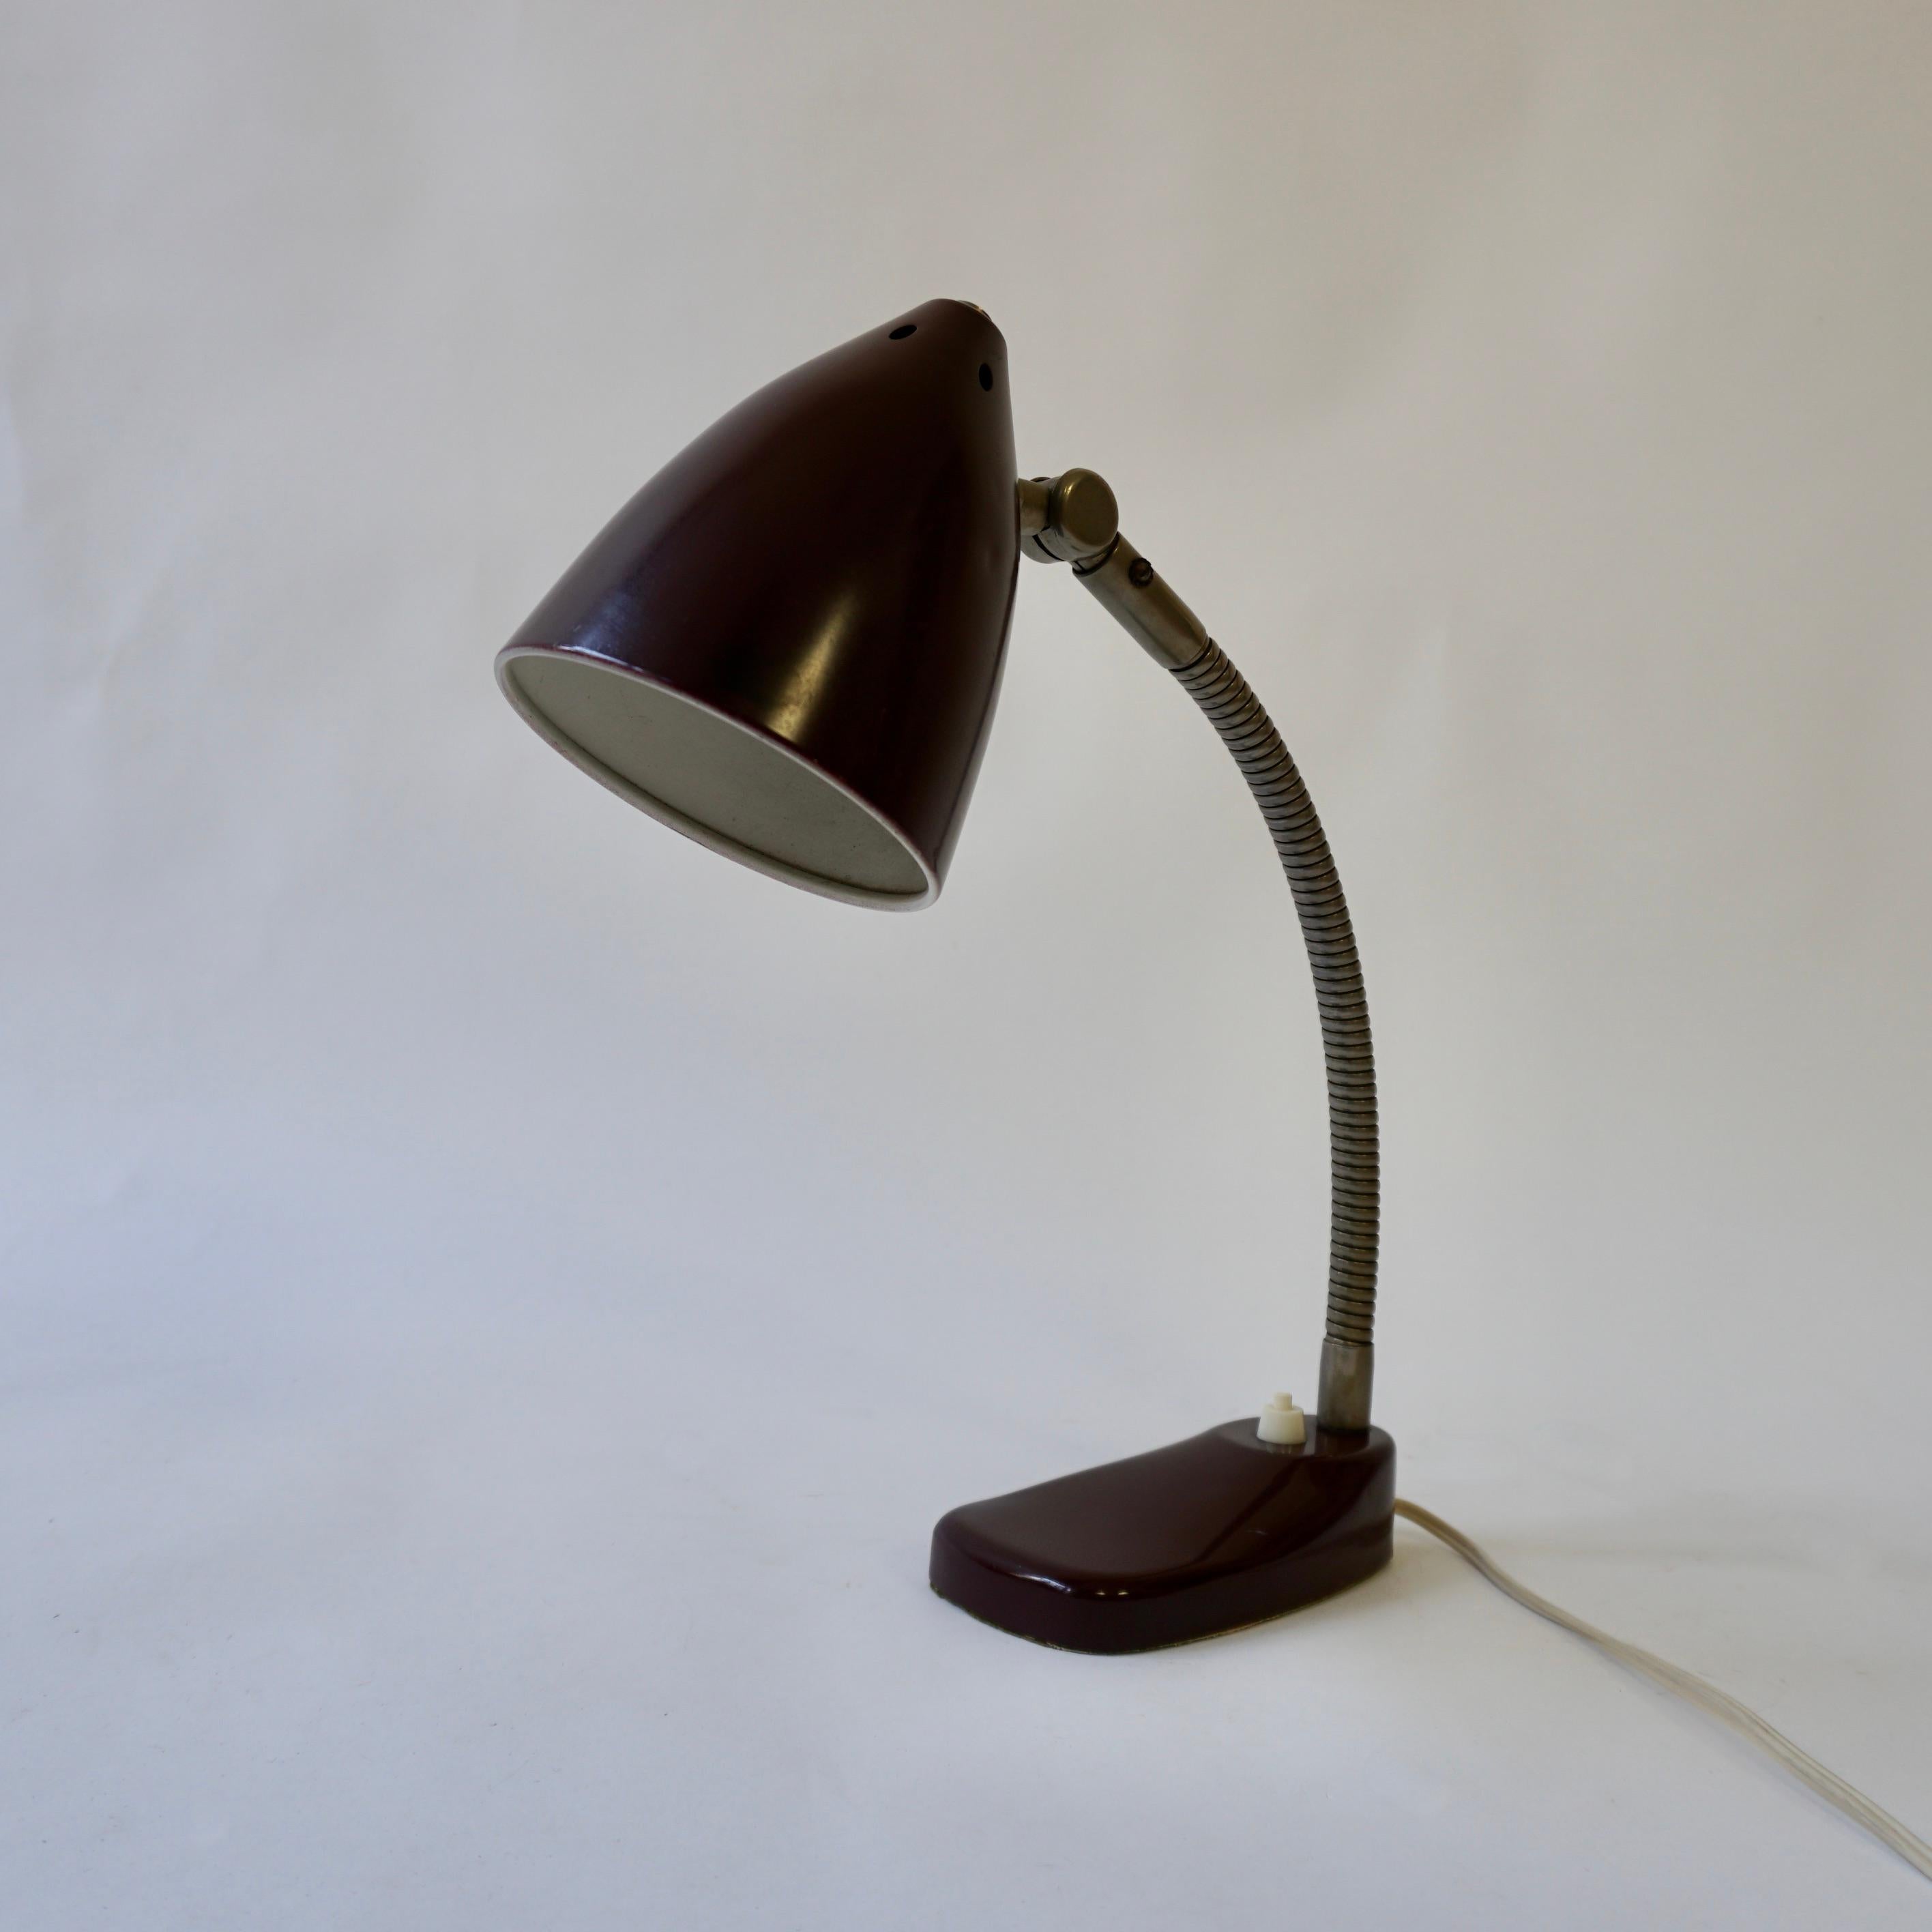 1940's Art Deco Adjustable Desk lamp or Reading Lamp For Sale 3